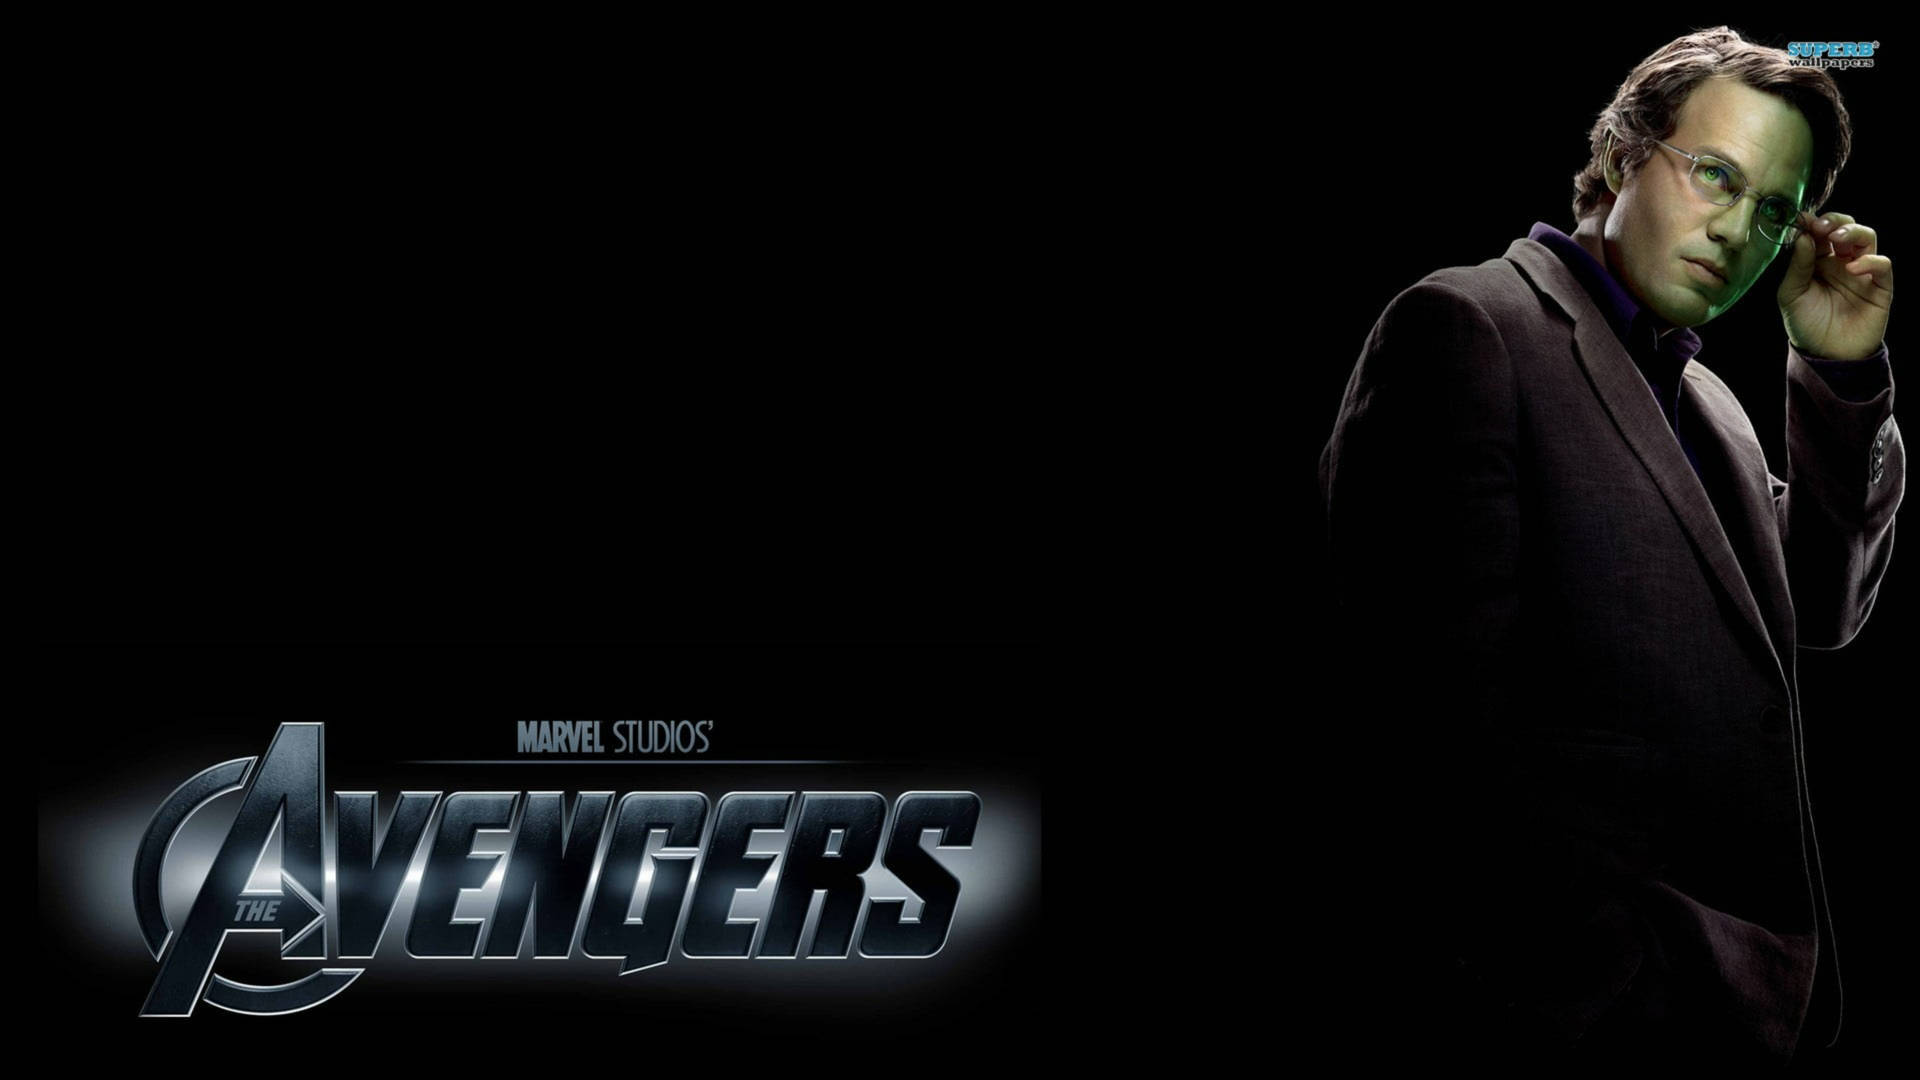 Mark Ruffalo The Avengers Digital Art Background